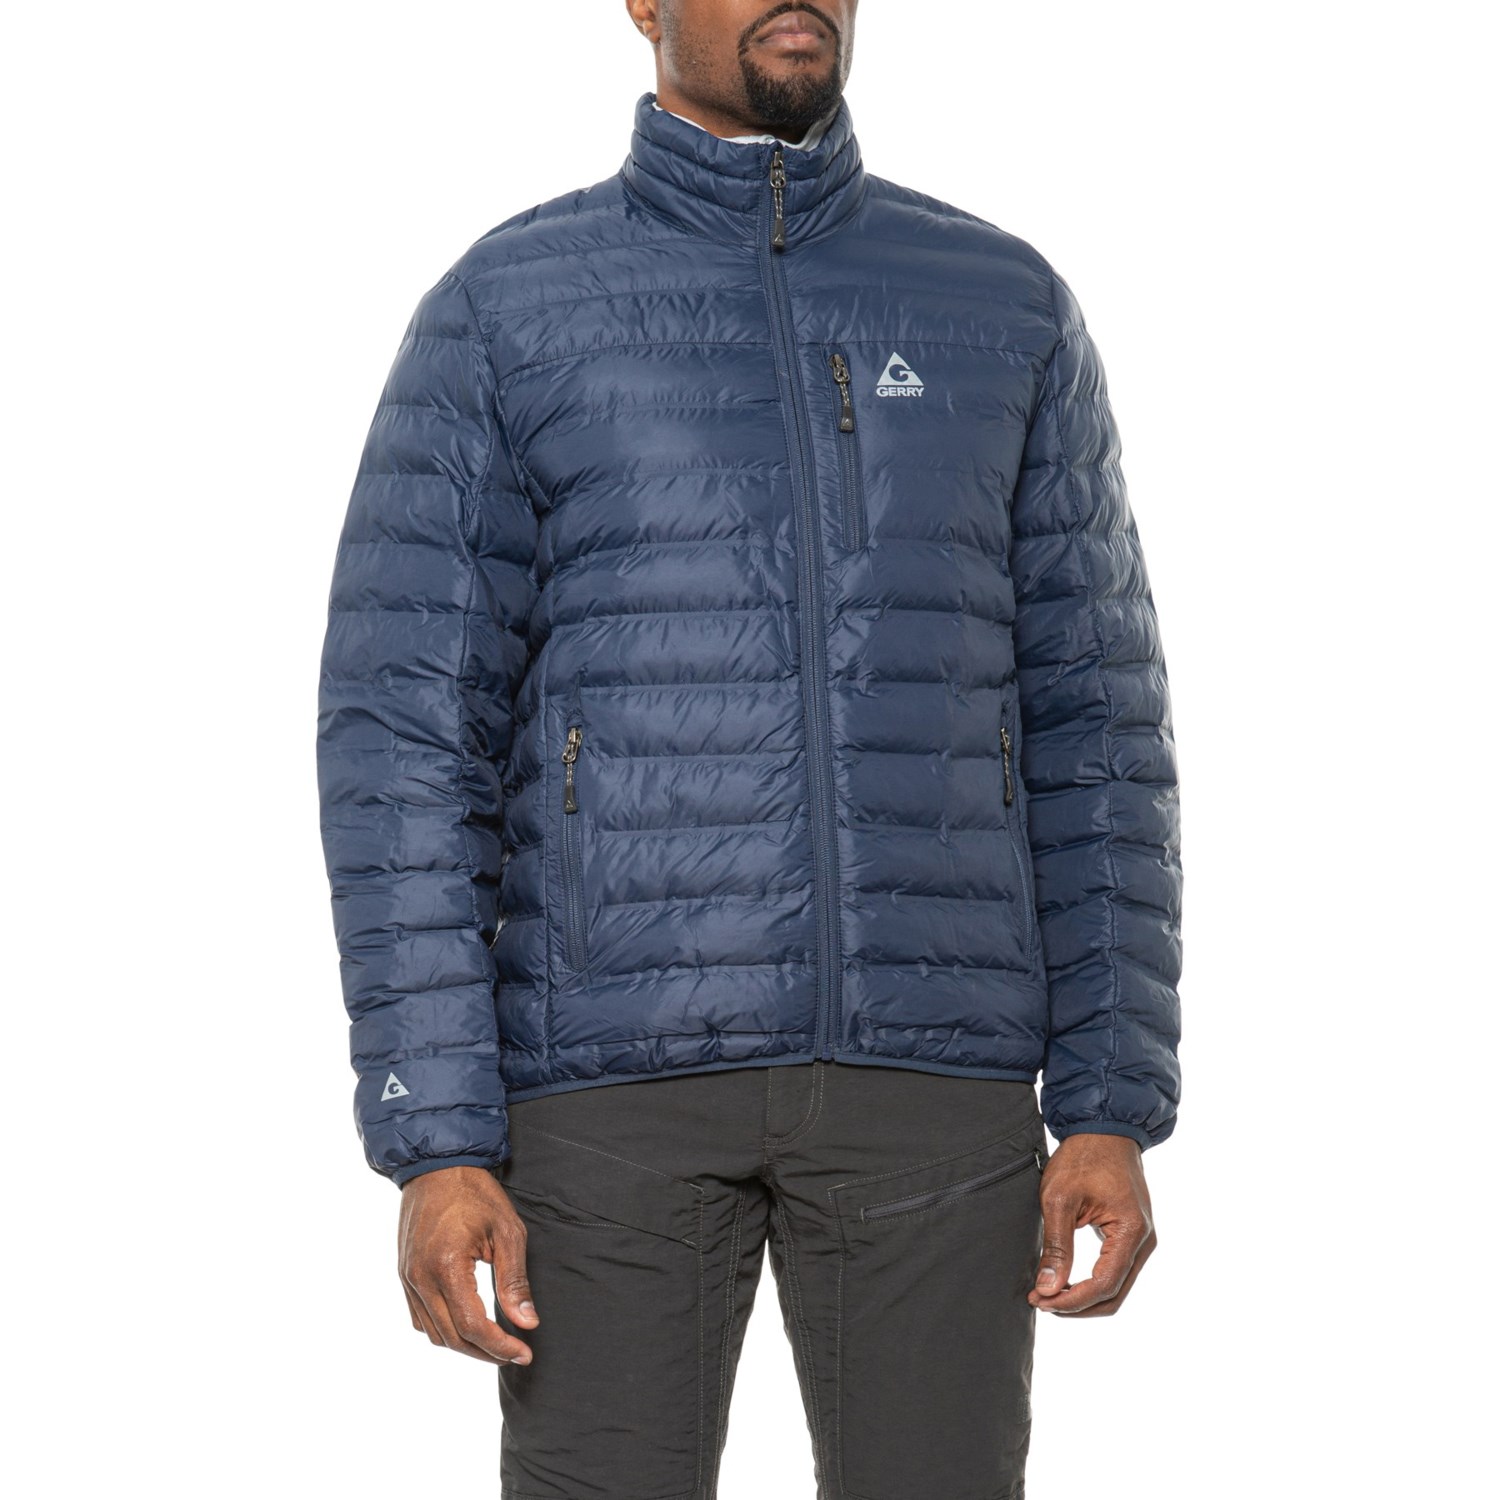 Gerry Replay Lightweight Packable Puffer Jacket for Men | Deep Indigo | Size Small | Nylon